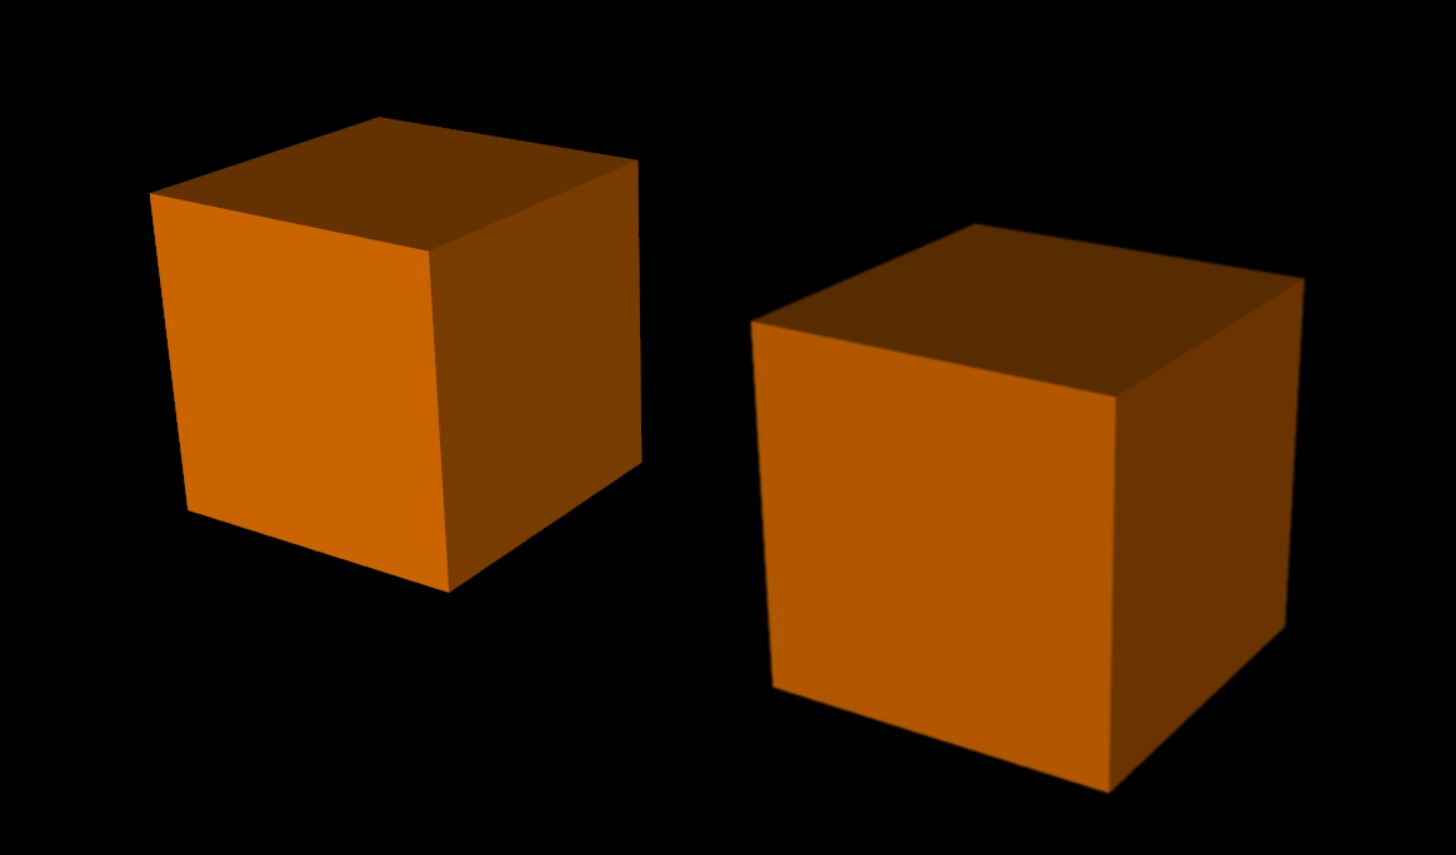 3x3 Gaussian Blur filter applied to a cube.